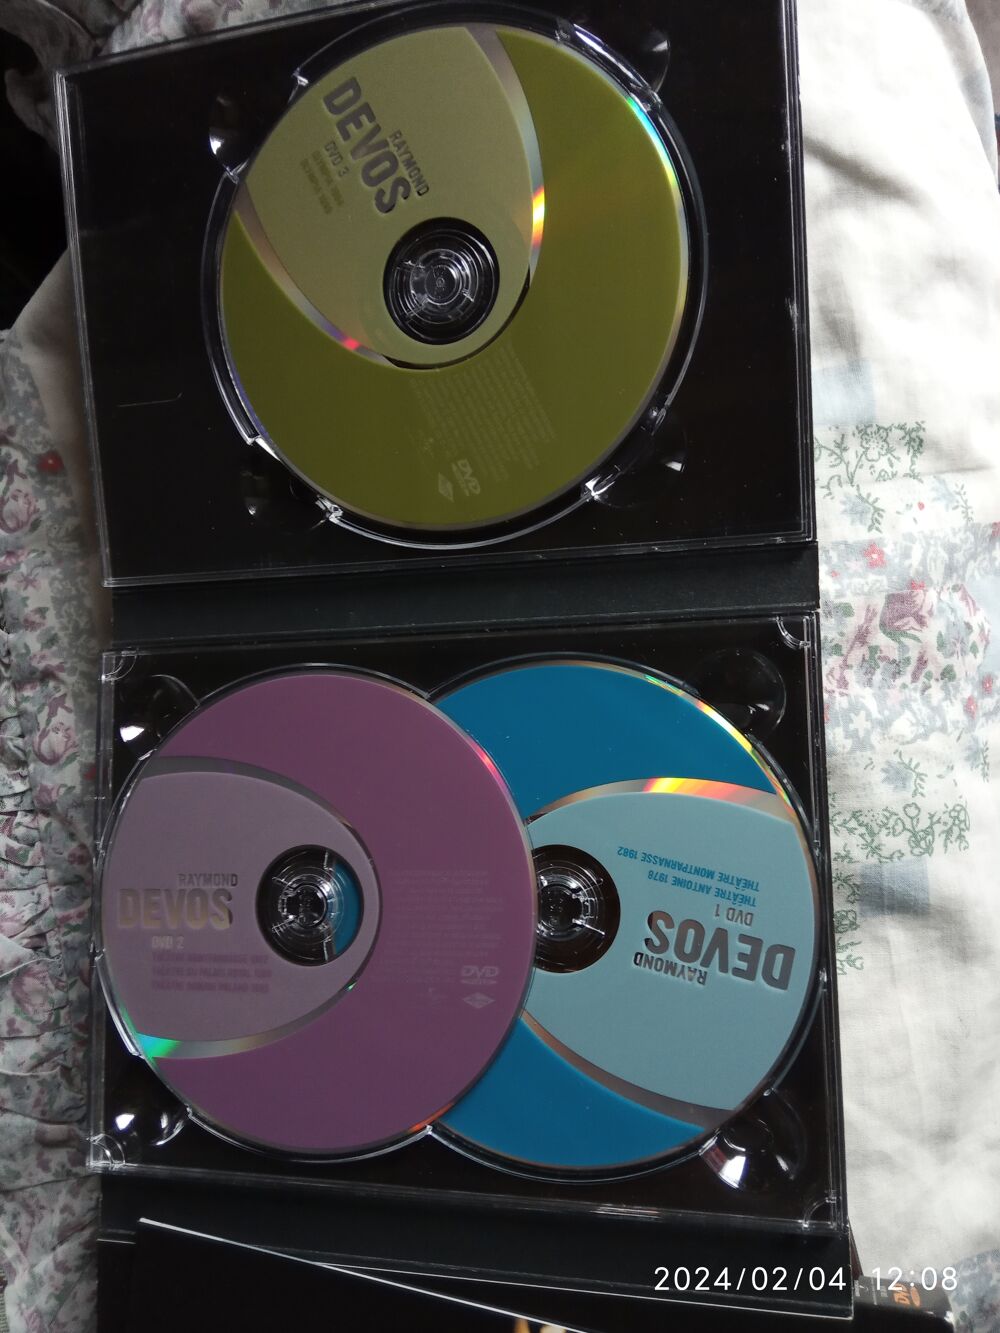 RAYMOND DEVOS en DVD DVD et blu-ray